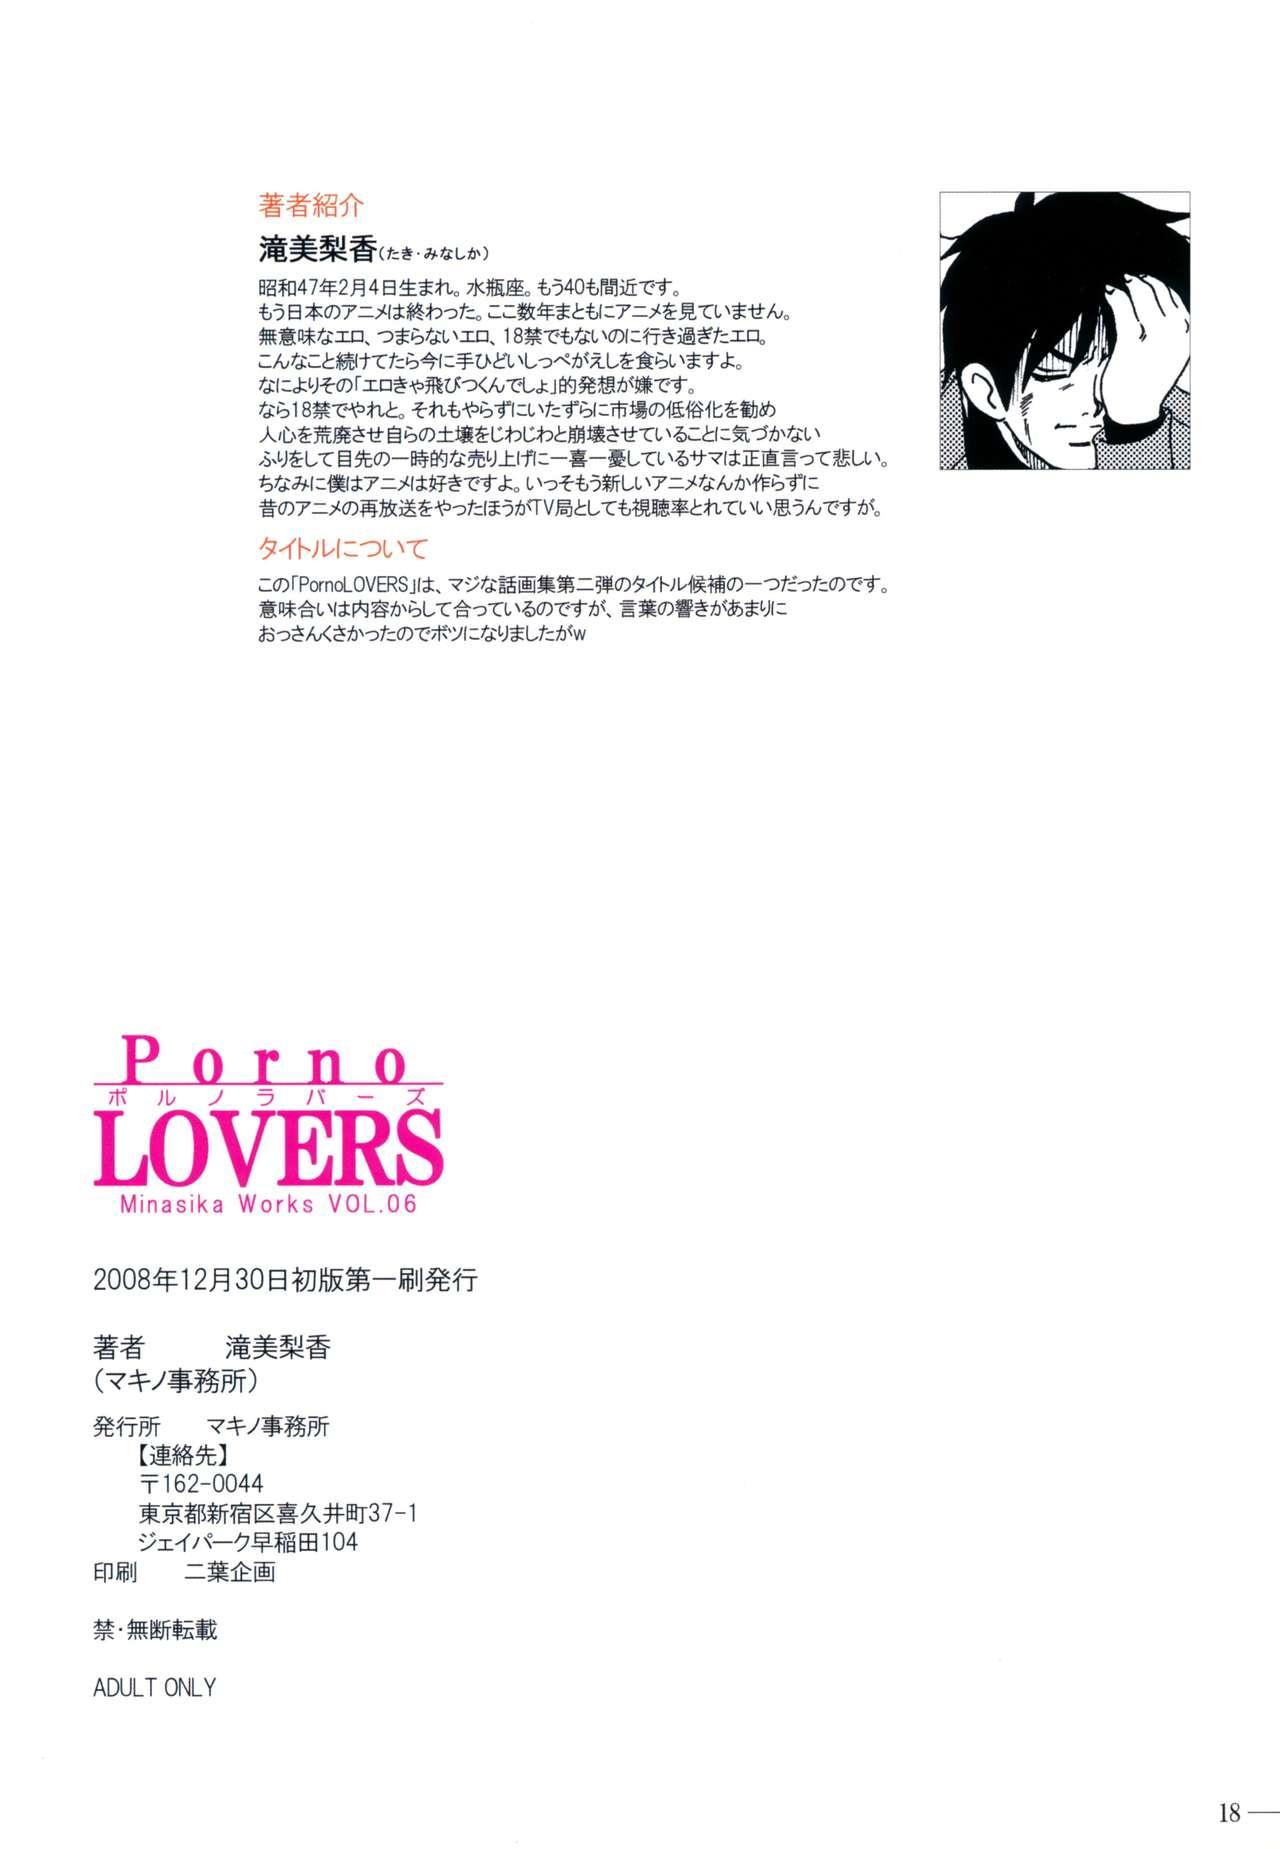 Show Porno Lovers - Minashika Works Vol. 06 - Original Tranny Porn - Page 17